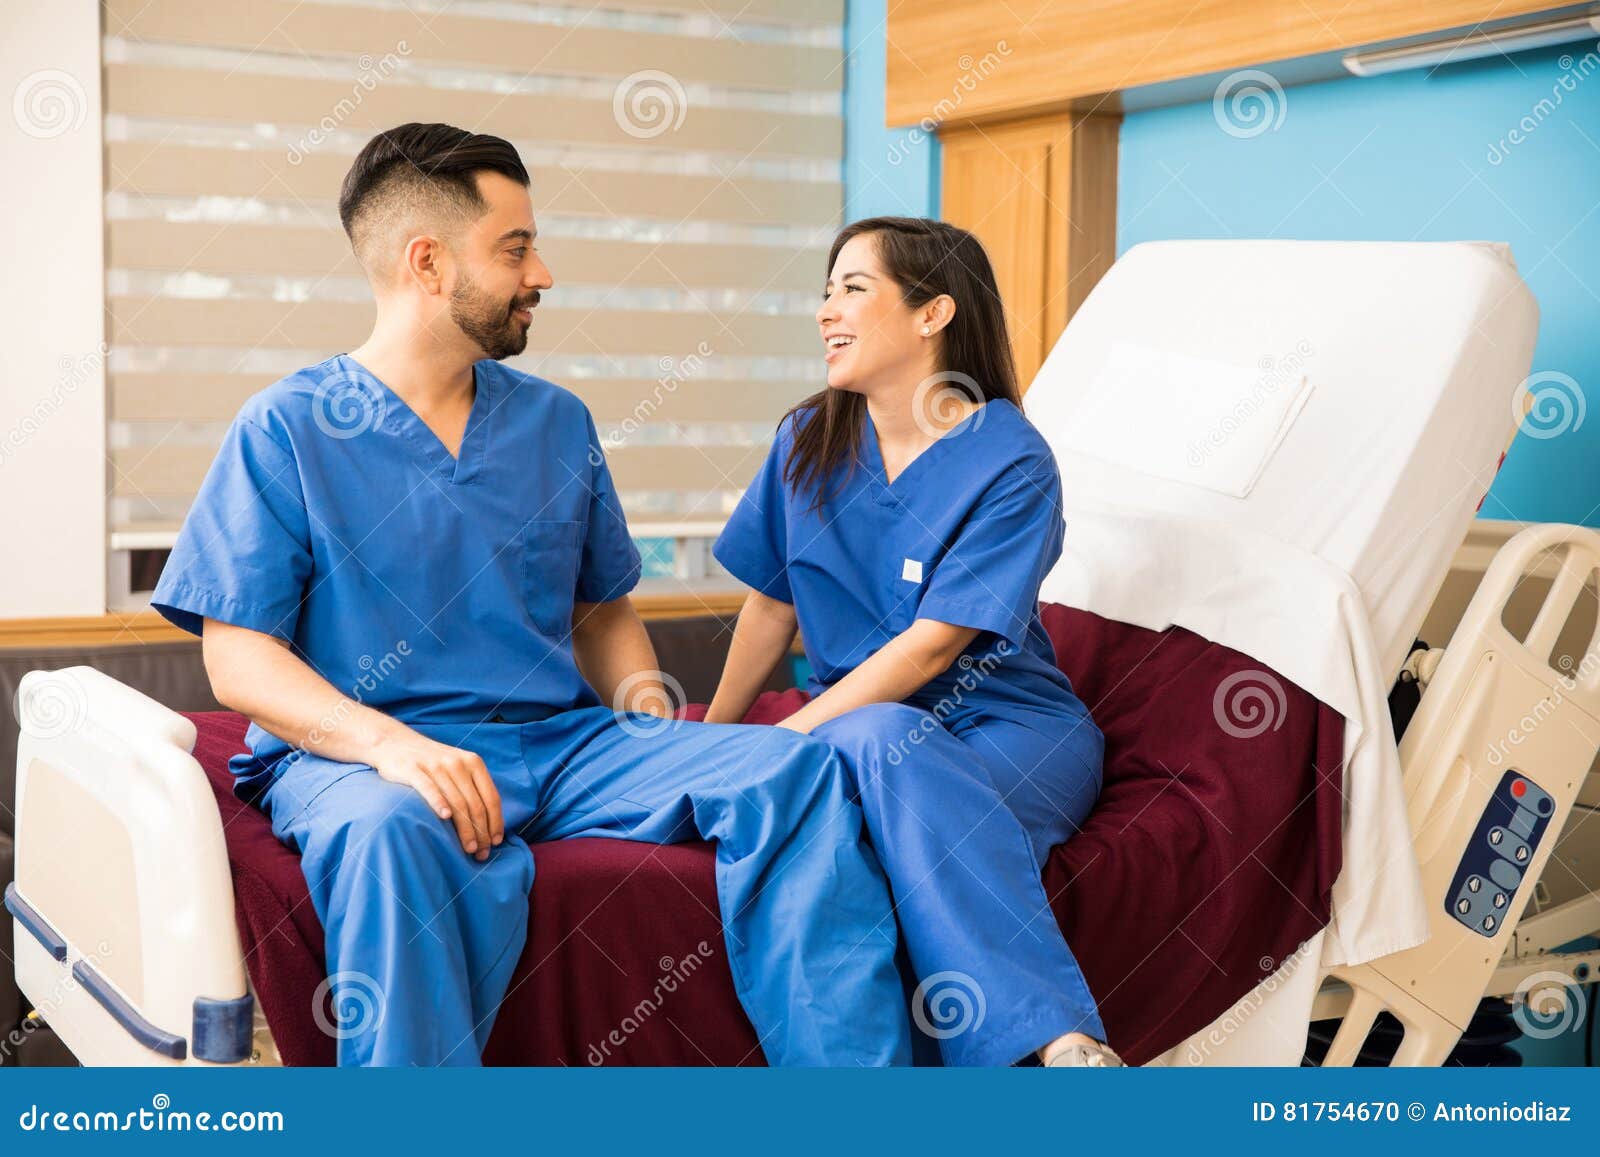 Медсестра дежурного врача. Комната отдыха медсестер. Медсестра отдыхает. Отдых медицинских работников. Медсестра отдыхает фото.